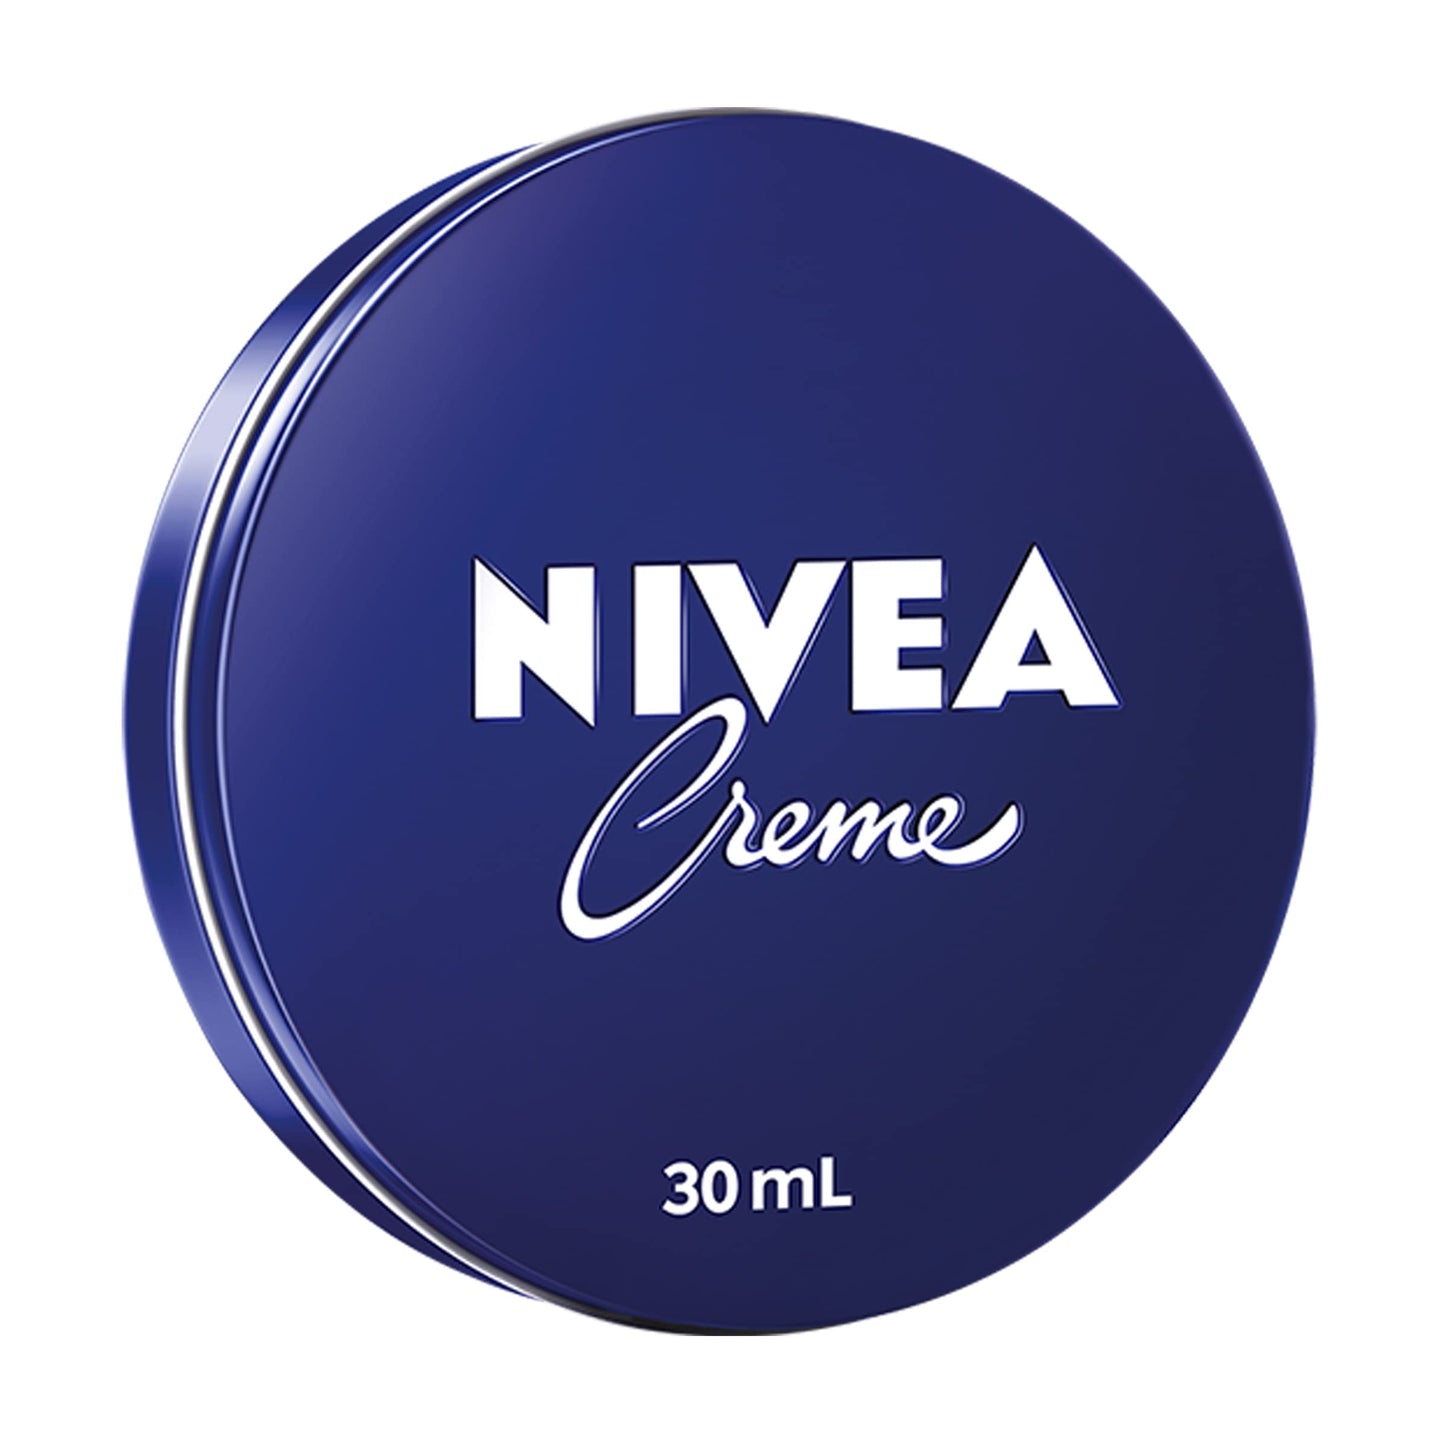 Nivea Creme - 1x30ml / Pack of 10